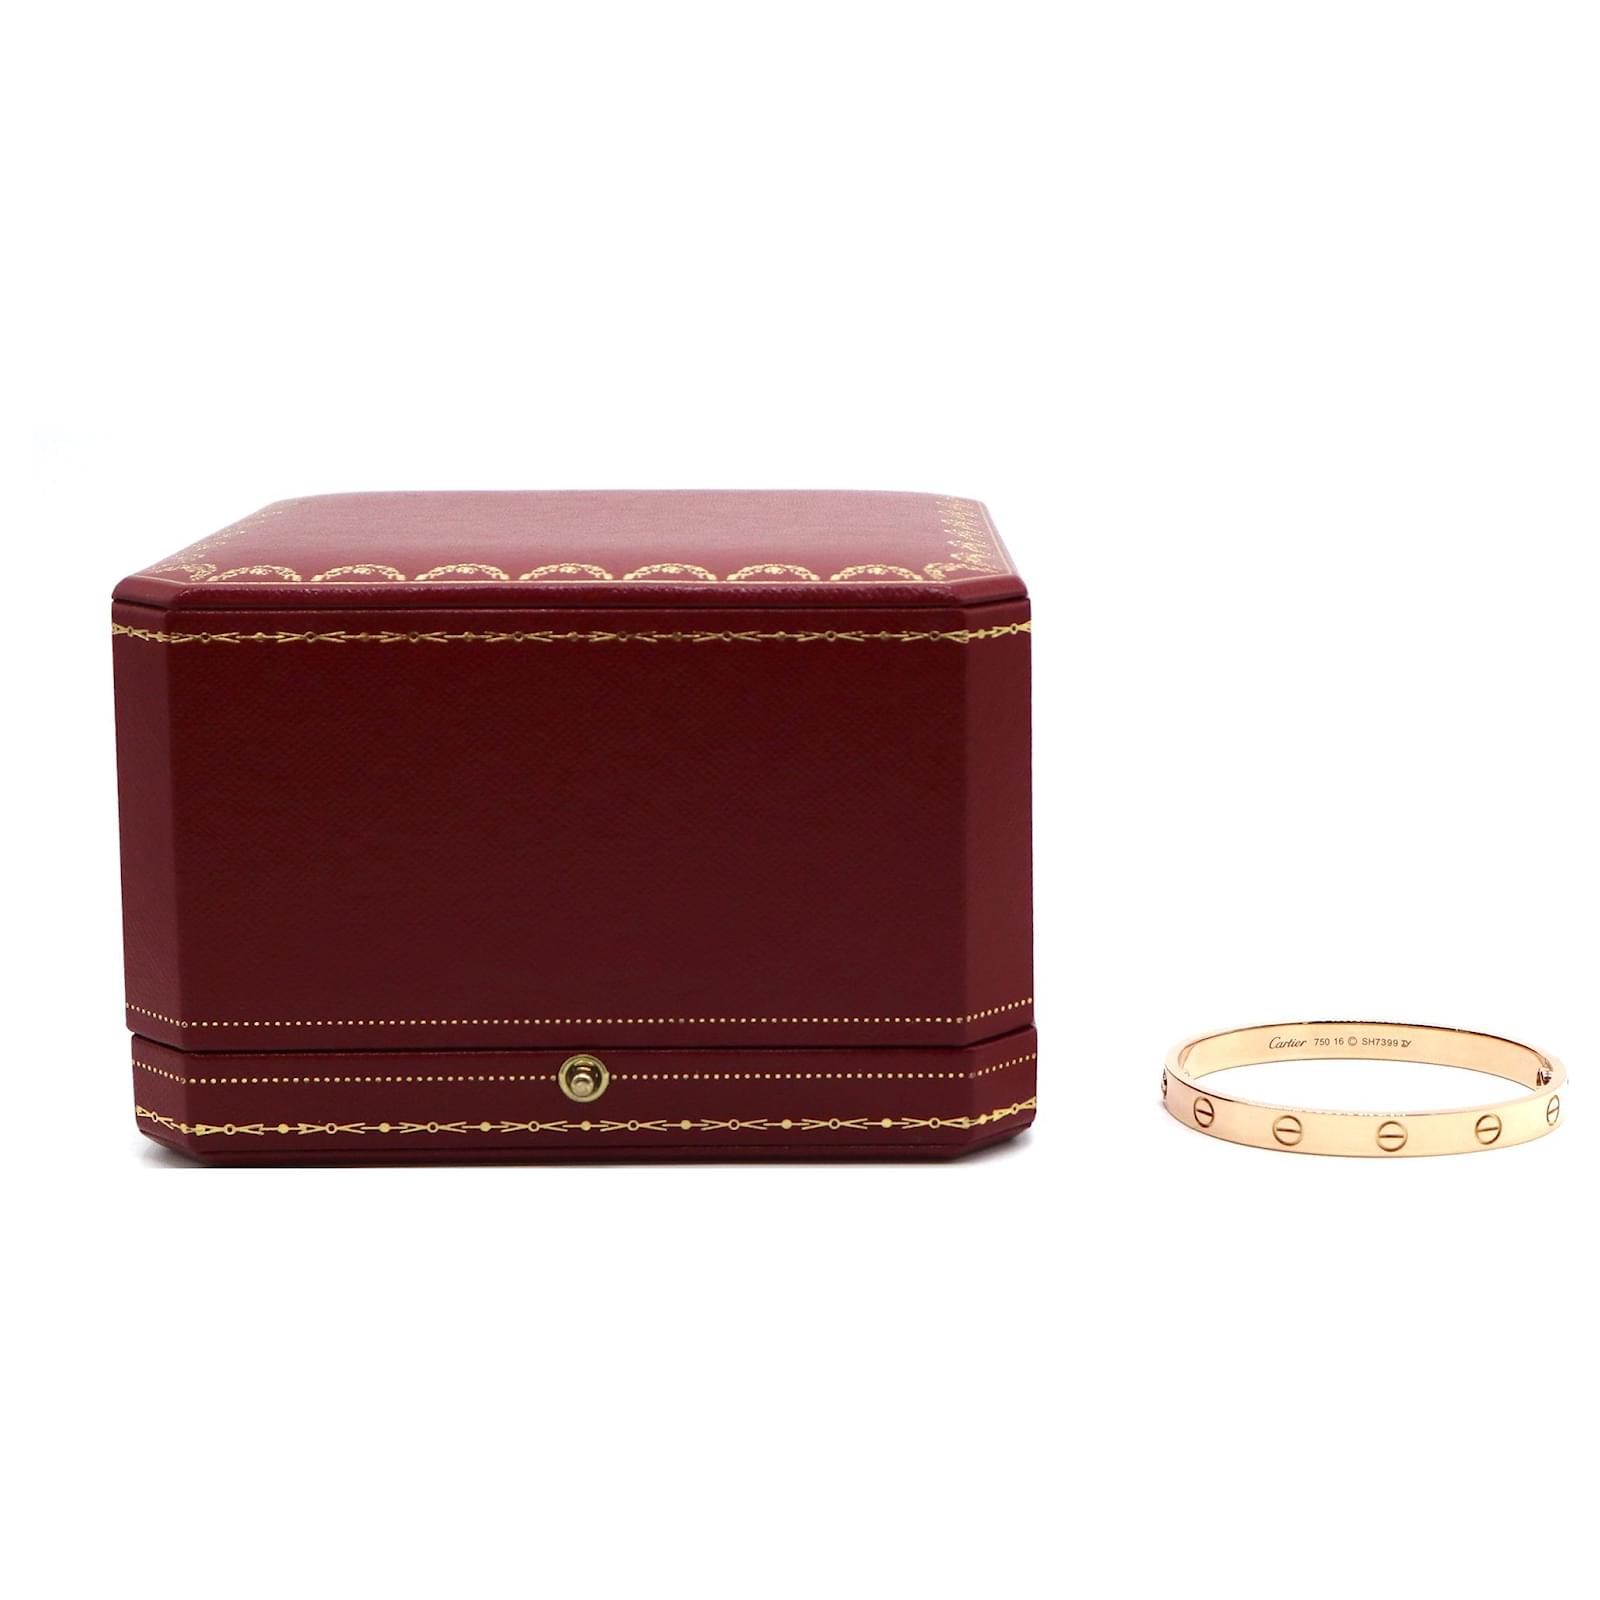 Cartier Love Bracelet Bangle 18K Pink Gold 750 Size16 90193981